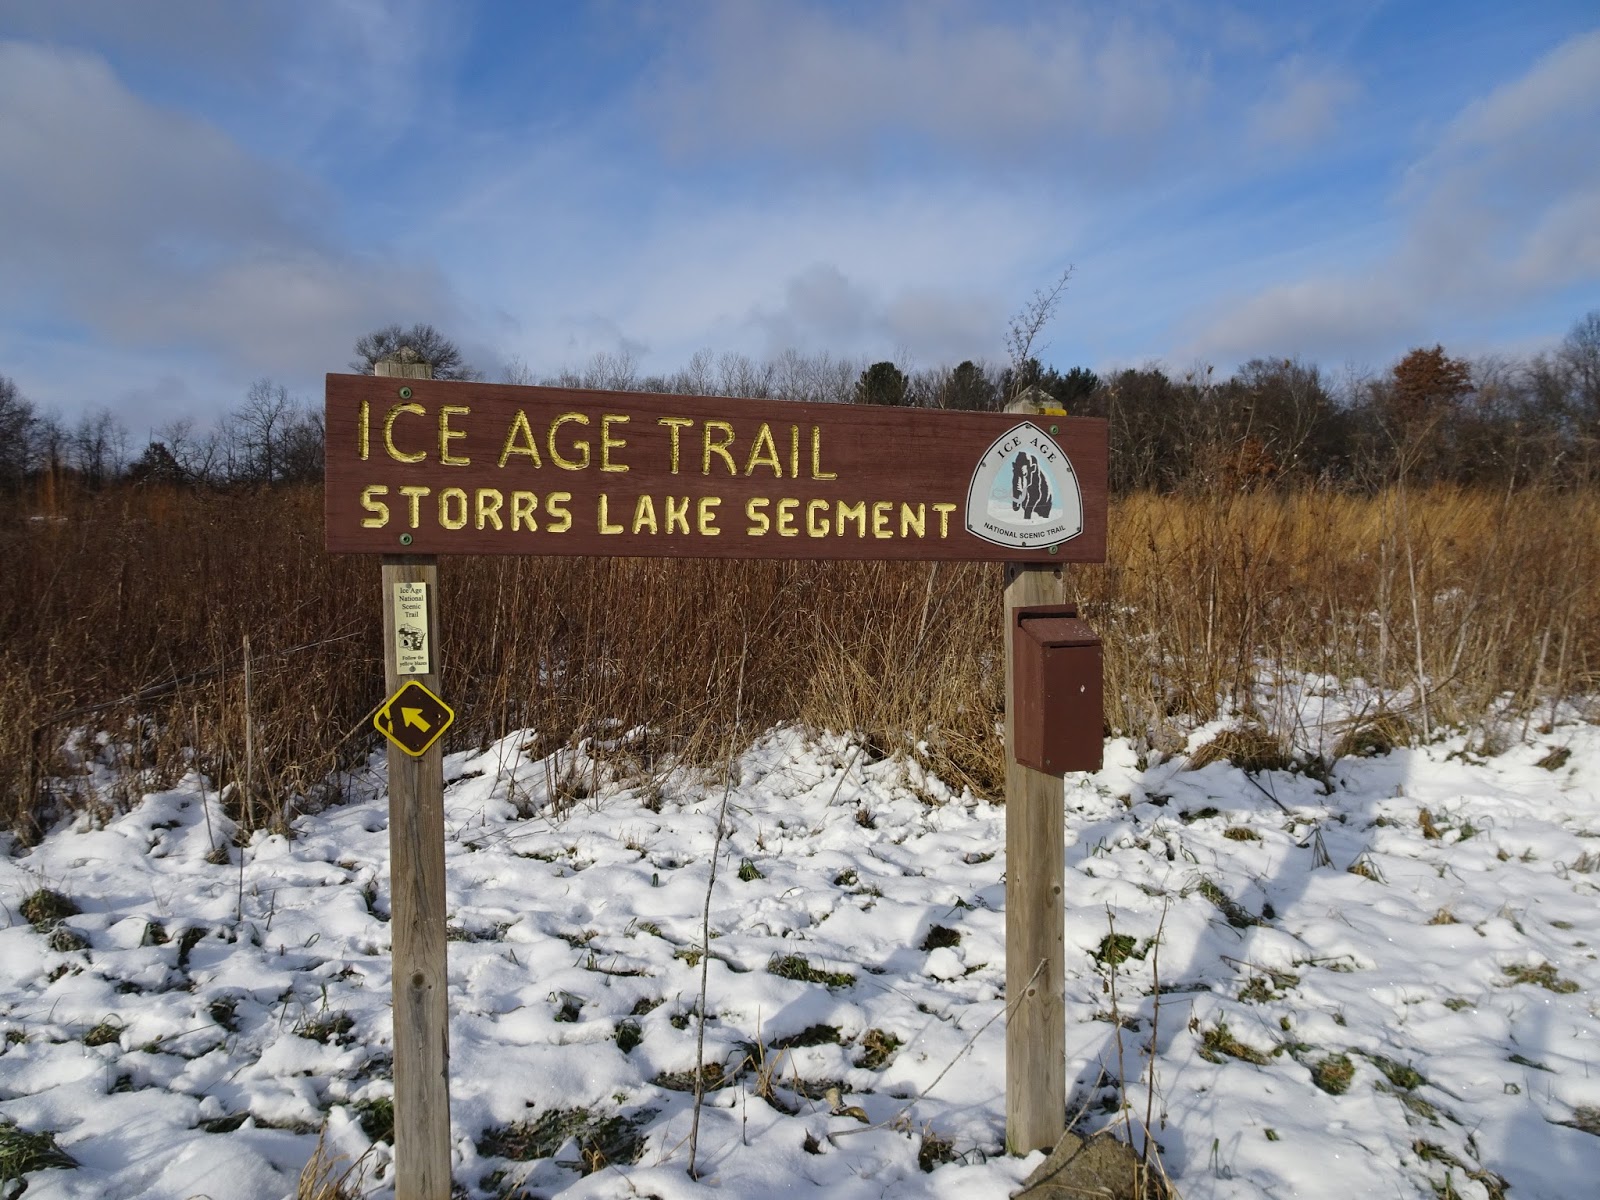 Ice Age Trail Storrs Lake Segment sign